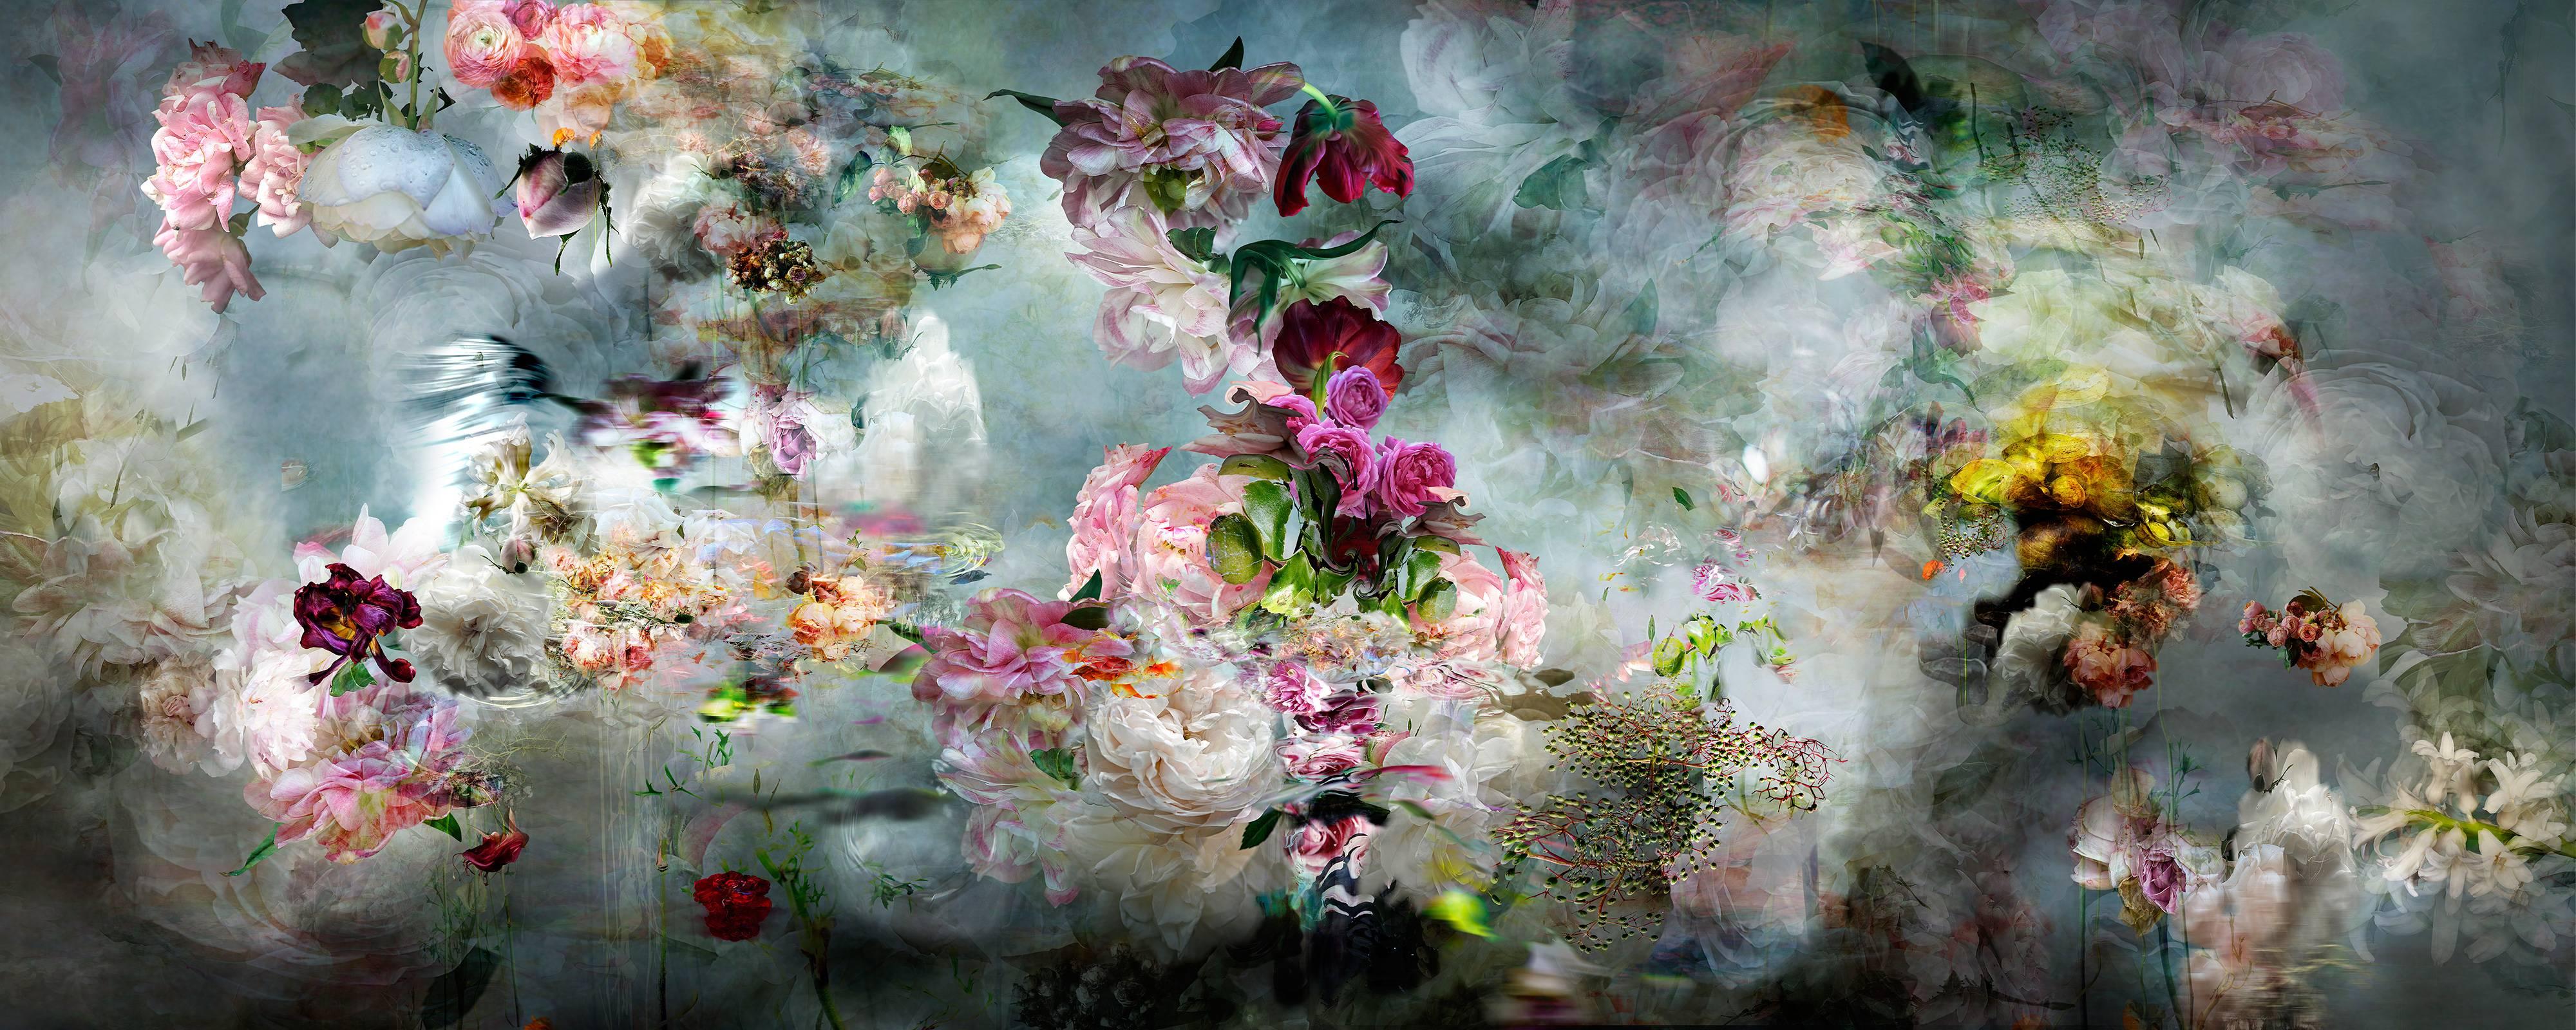 Isabelle Menin Abstract Photograph – Song for dead heroes #4 florales abstraktes Landschaftsstillleben Blumenfoto